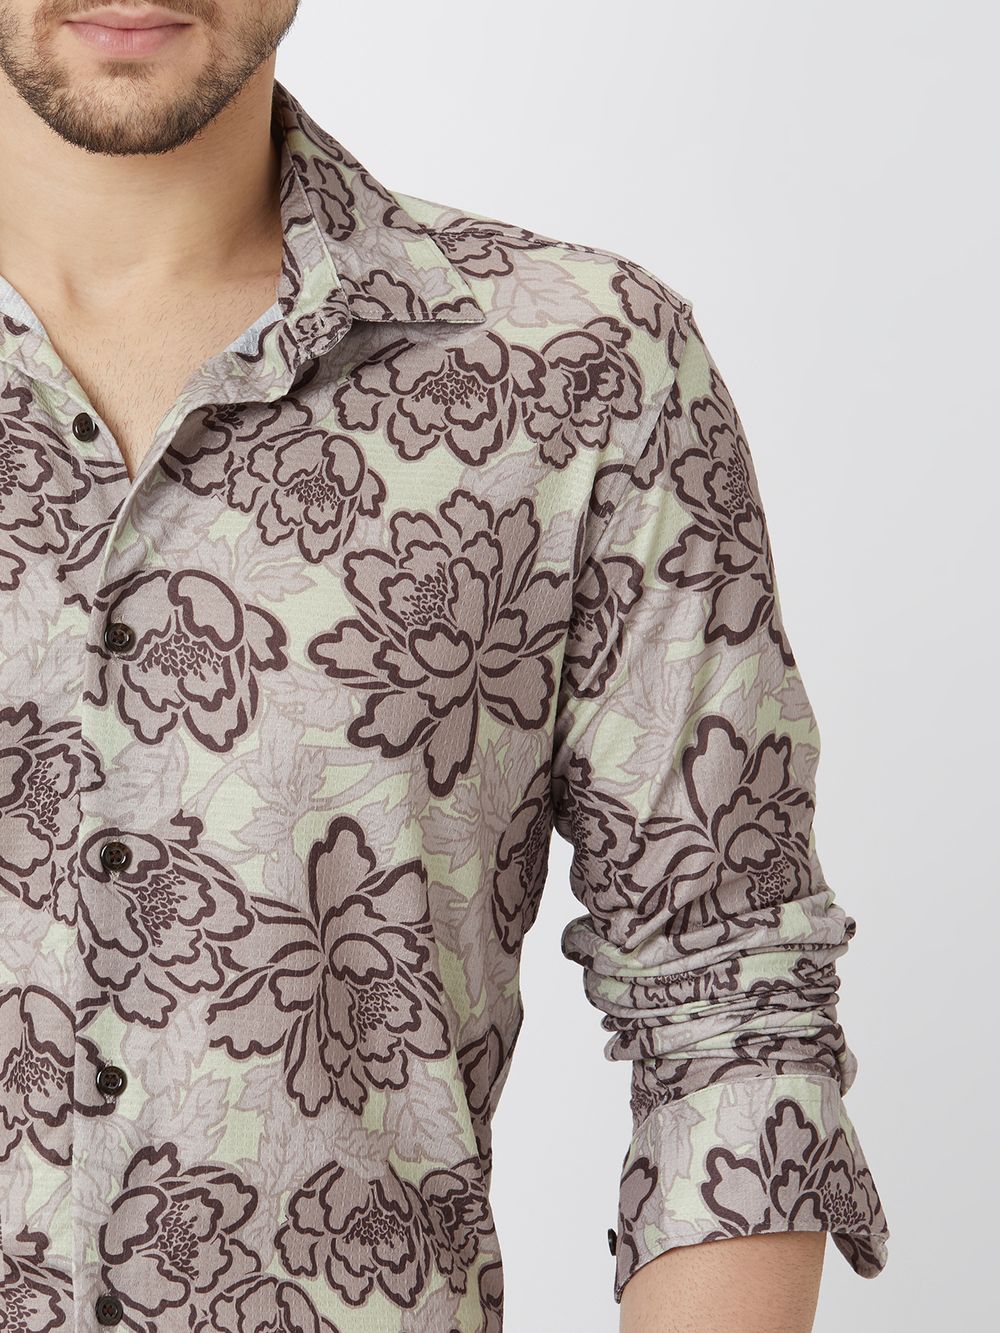 Maroon Floral Print Shirt